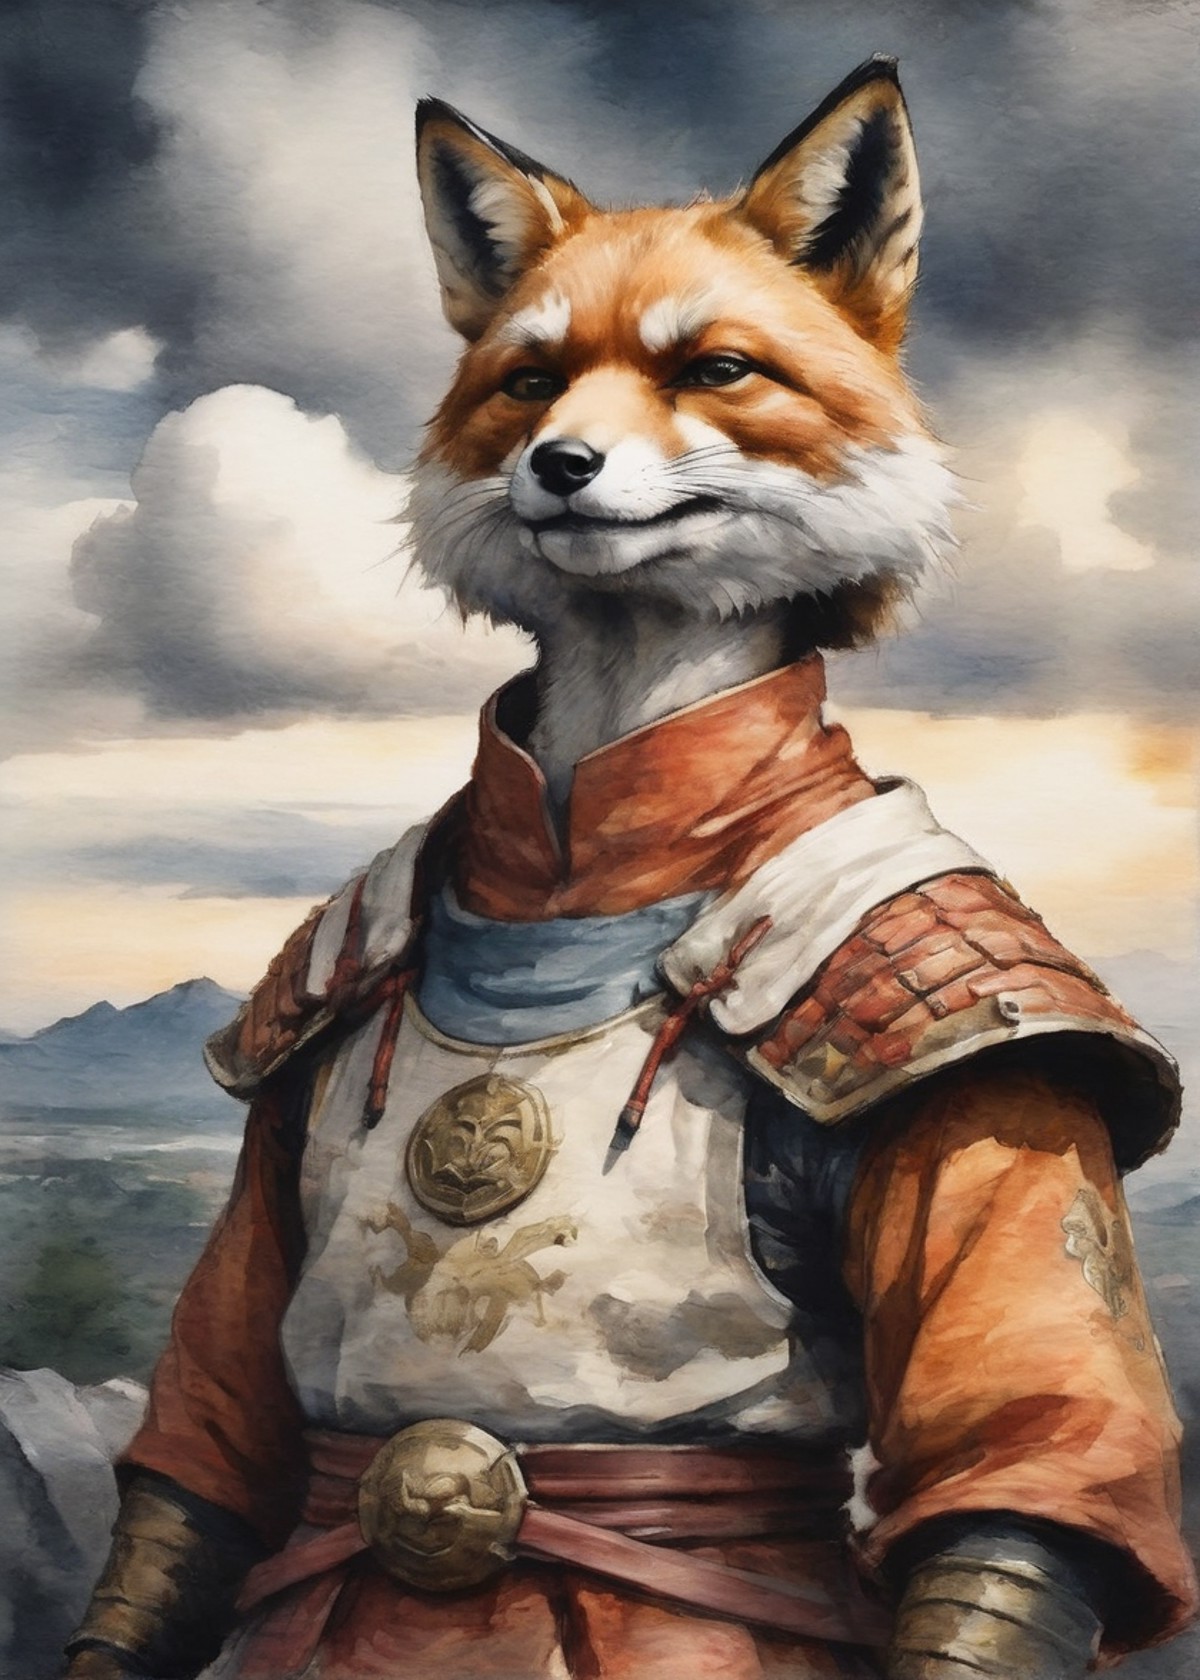 closeup portrait of an anthropomorphized fox samurai warrior on a rocky ledge under a dramatic sky